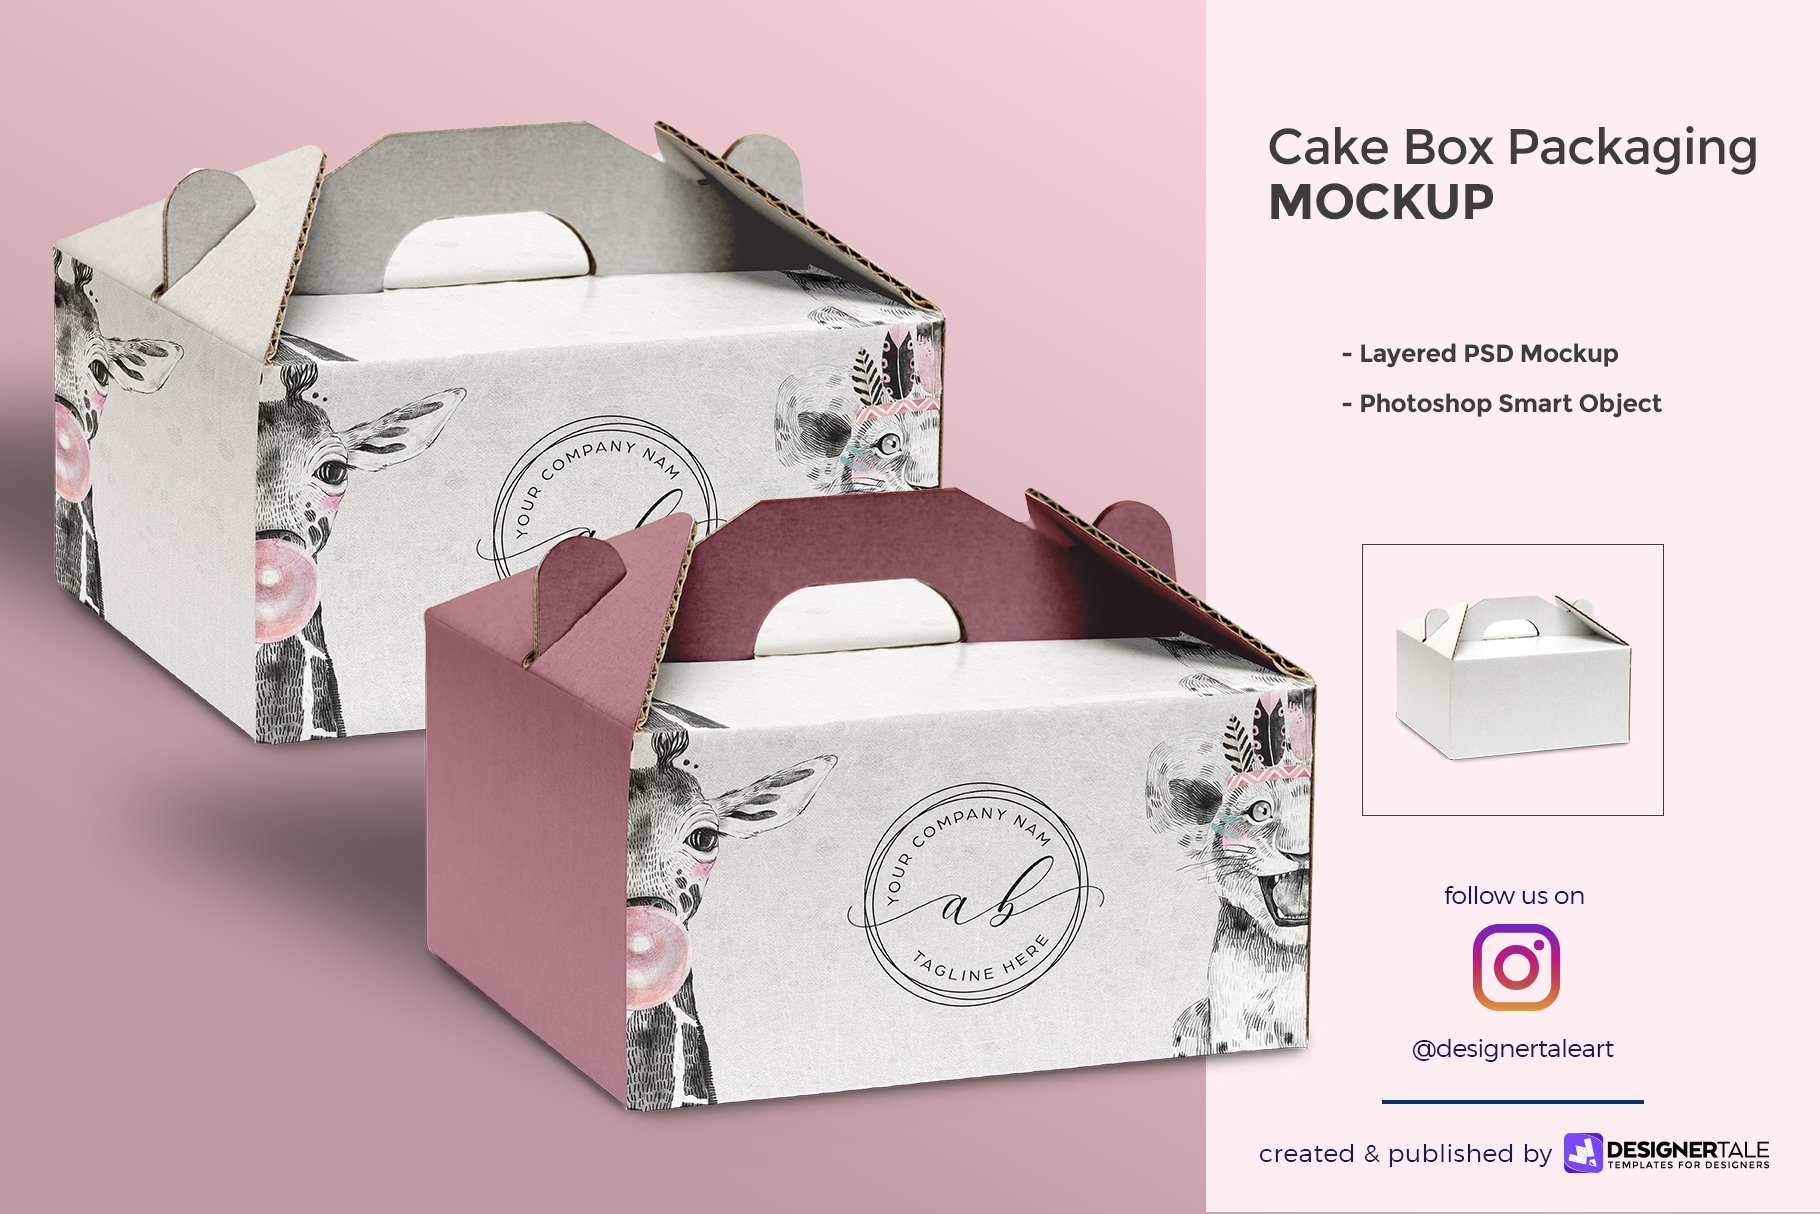 Cake Box Packaging Mockup